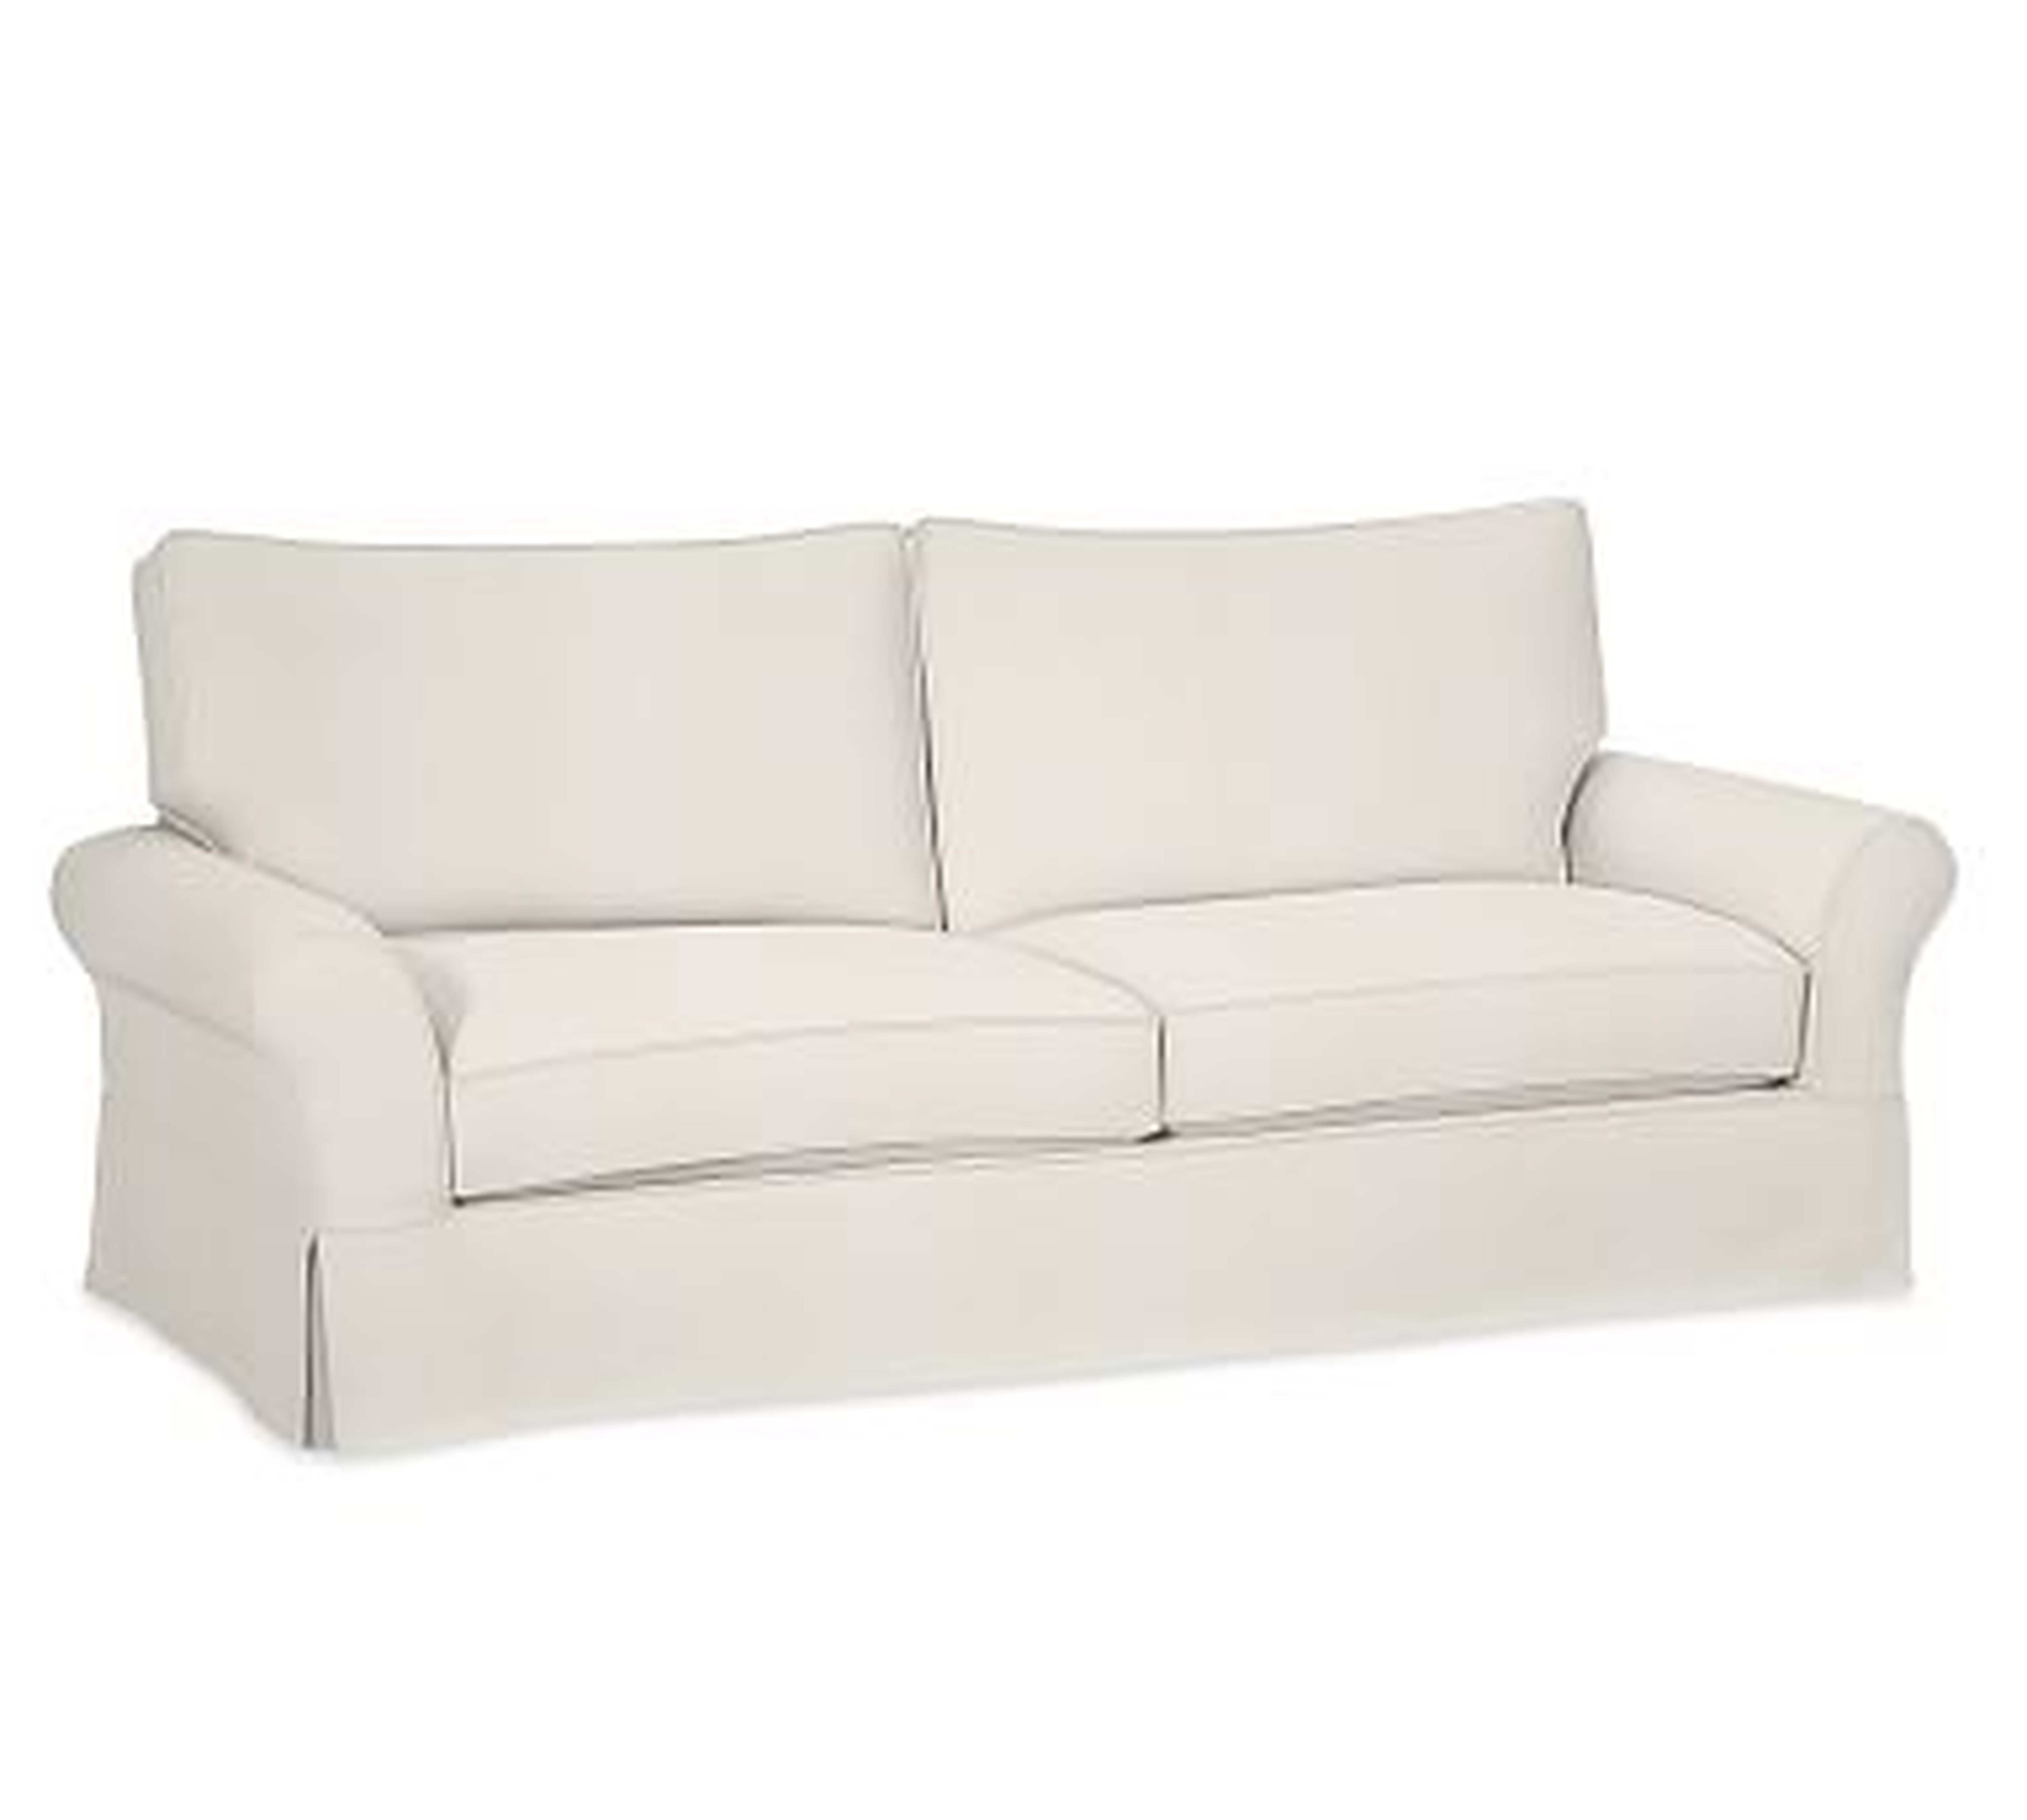 PB Comfort Roll Arm Slipcovered Grand Sofa 92", 2X2, Box Edge, Memory Foam Cushions, Denim Warm White - Pottery Barn